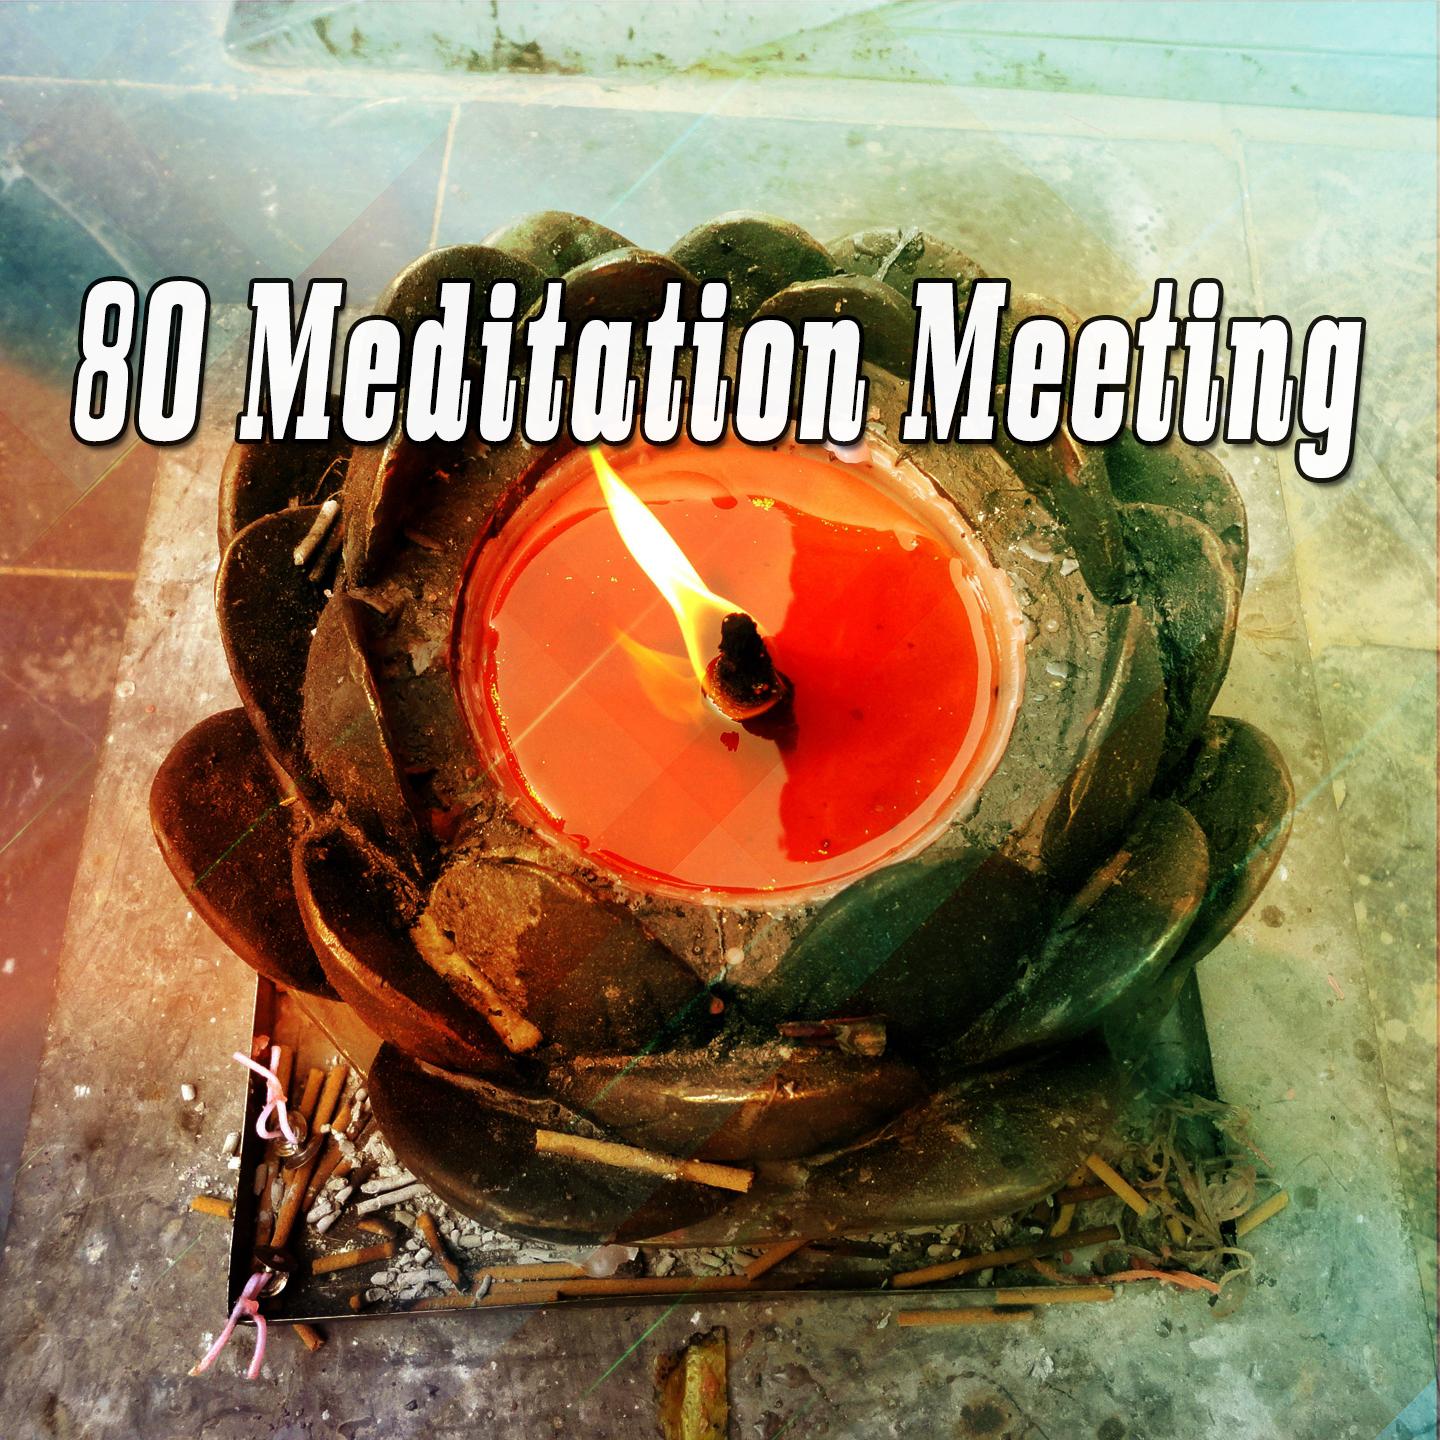 80 Meditation Meeting